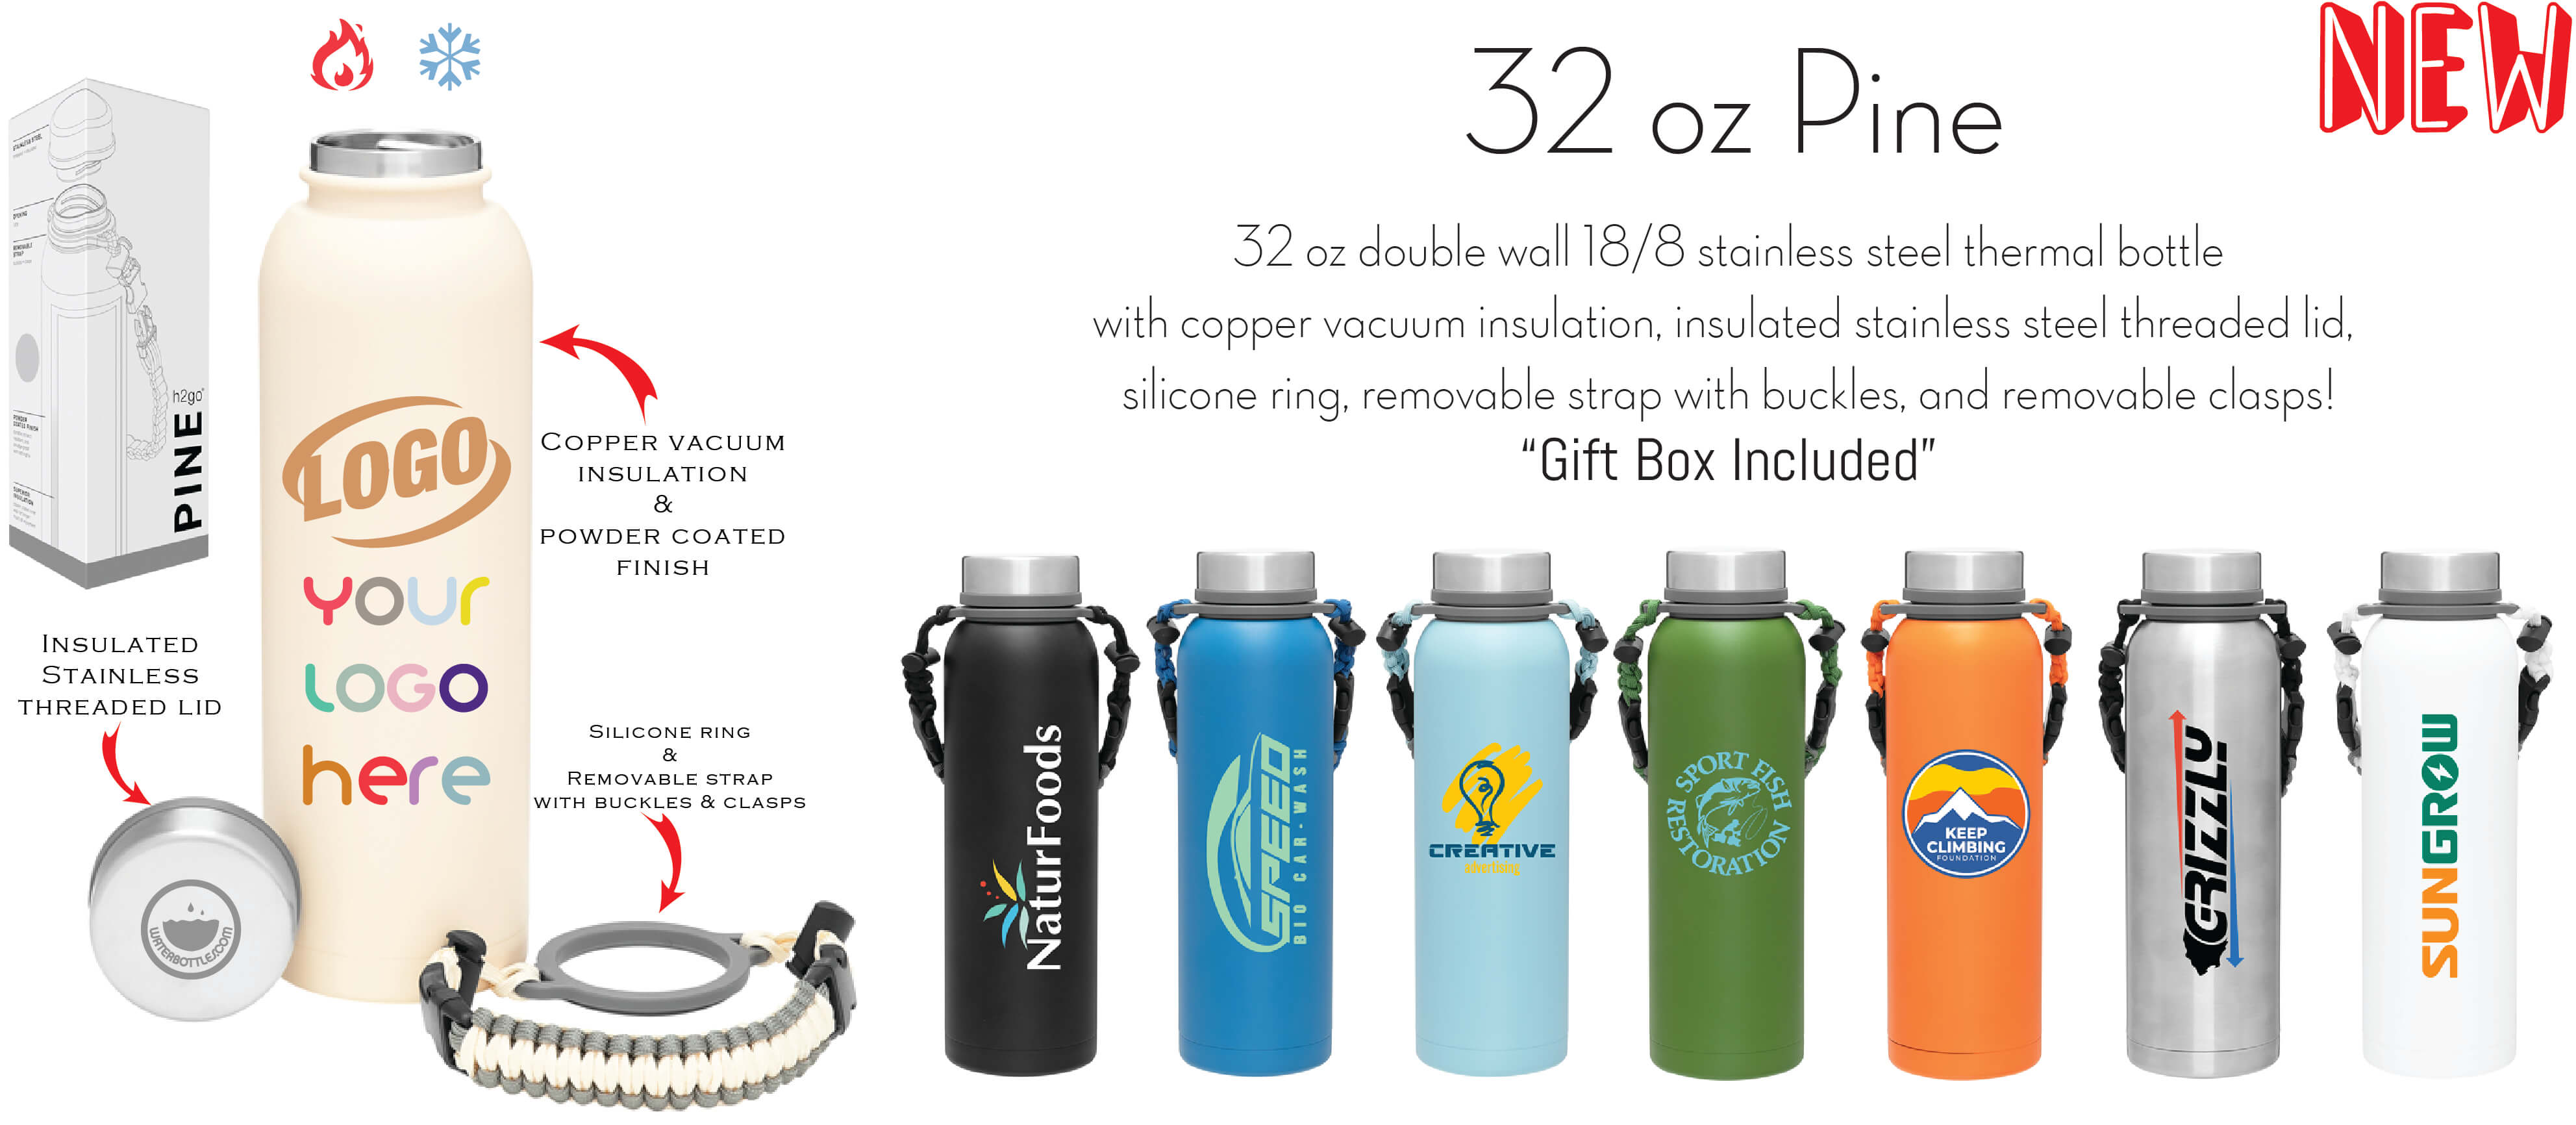 24 Oz. Contigo Ashland 2.0 Lid Bottle  Sport & Water Bottles 